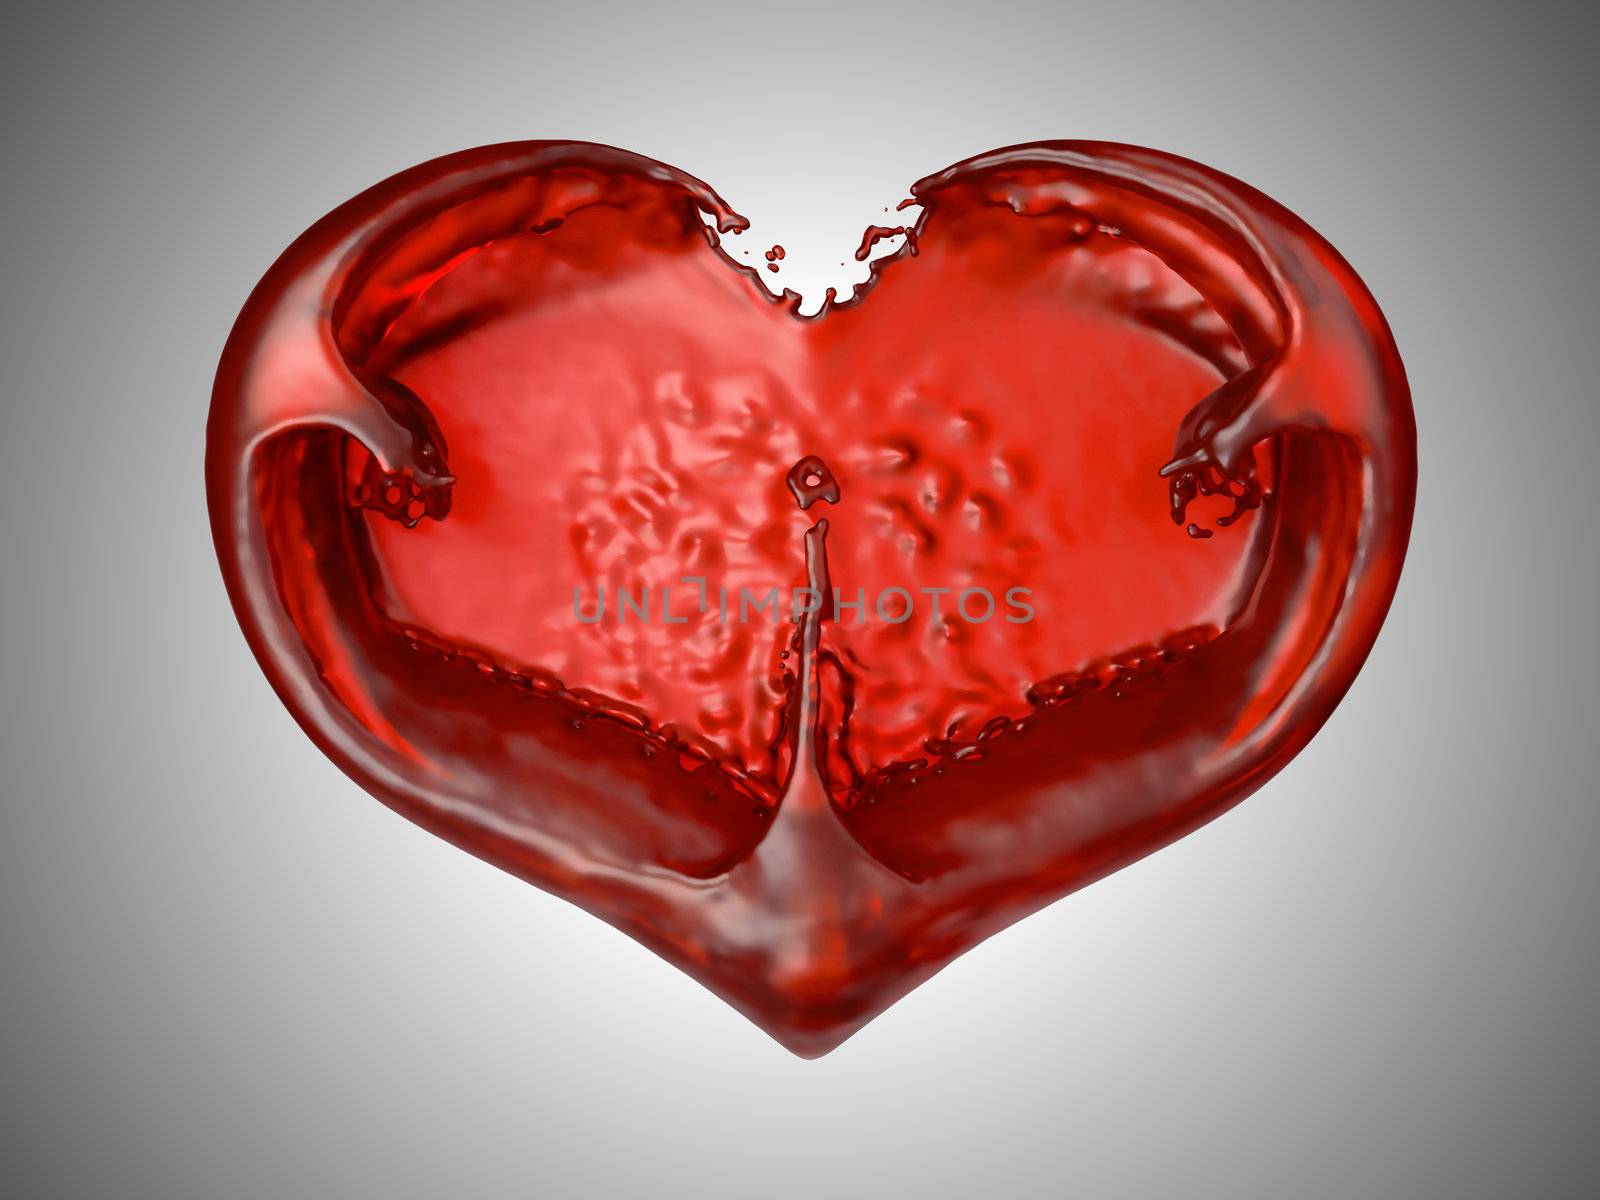 Love and Romance - Red liquid heart shape by Arsgera